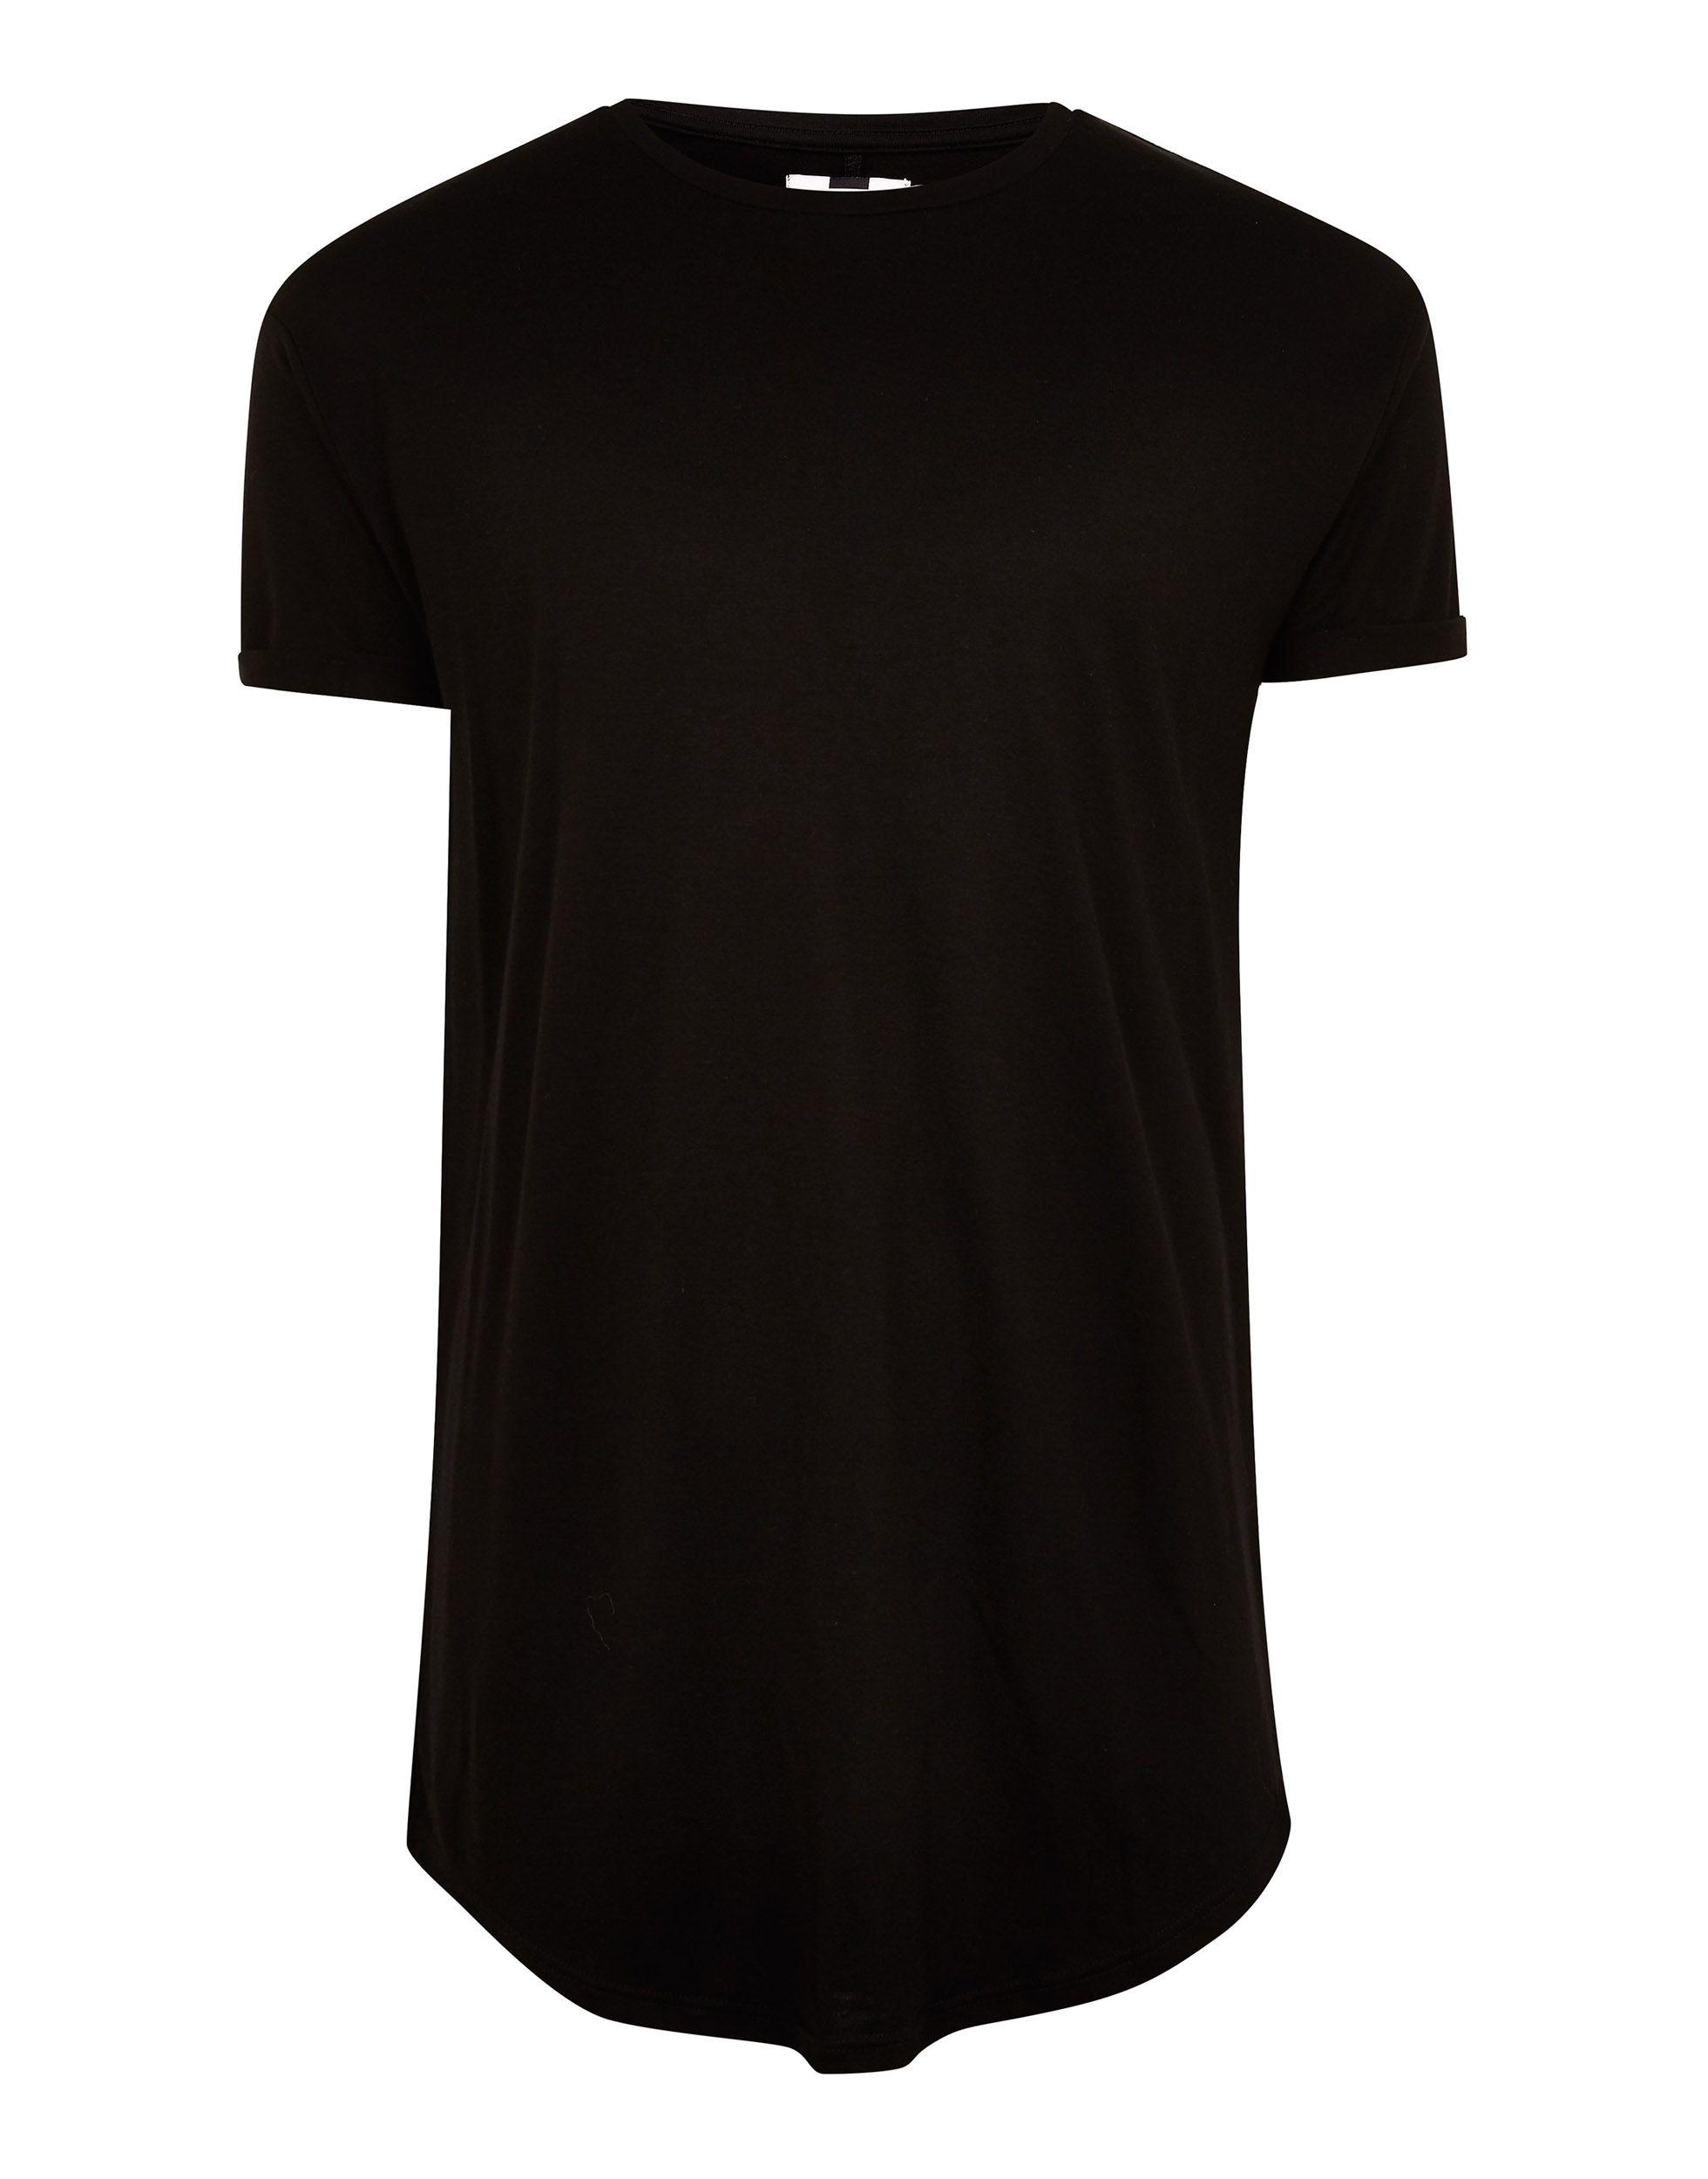 TOPMAN Curved Hem Longline T-shirt in Black for Men